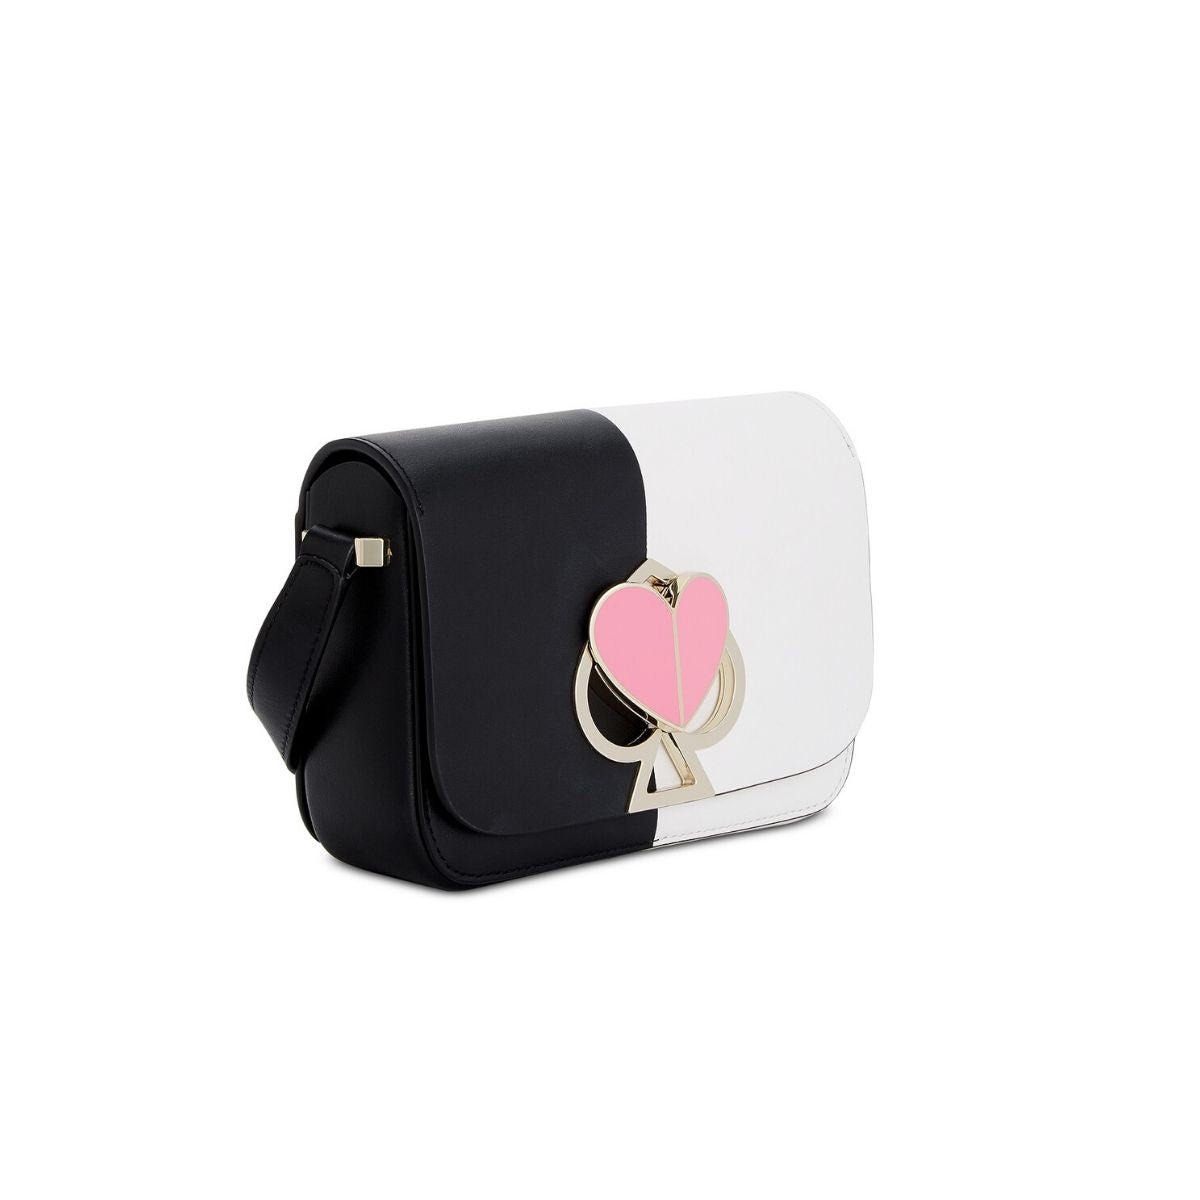 Nicola Bicolor Twistlock Small Black and Optic White Shoulder Bag